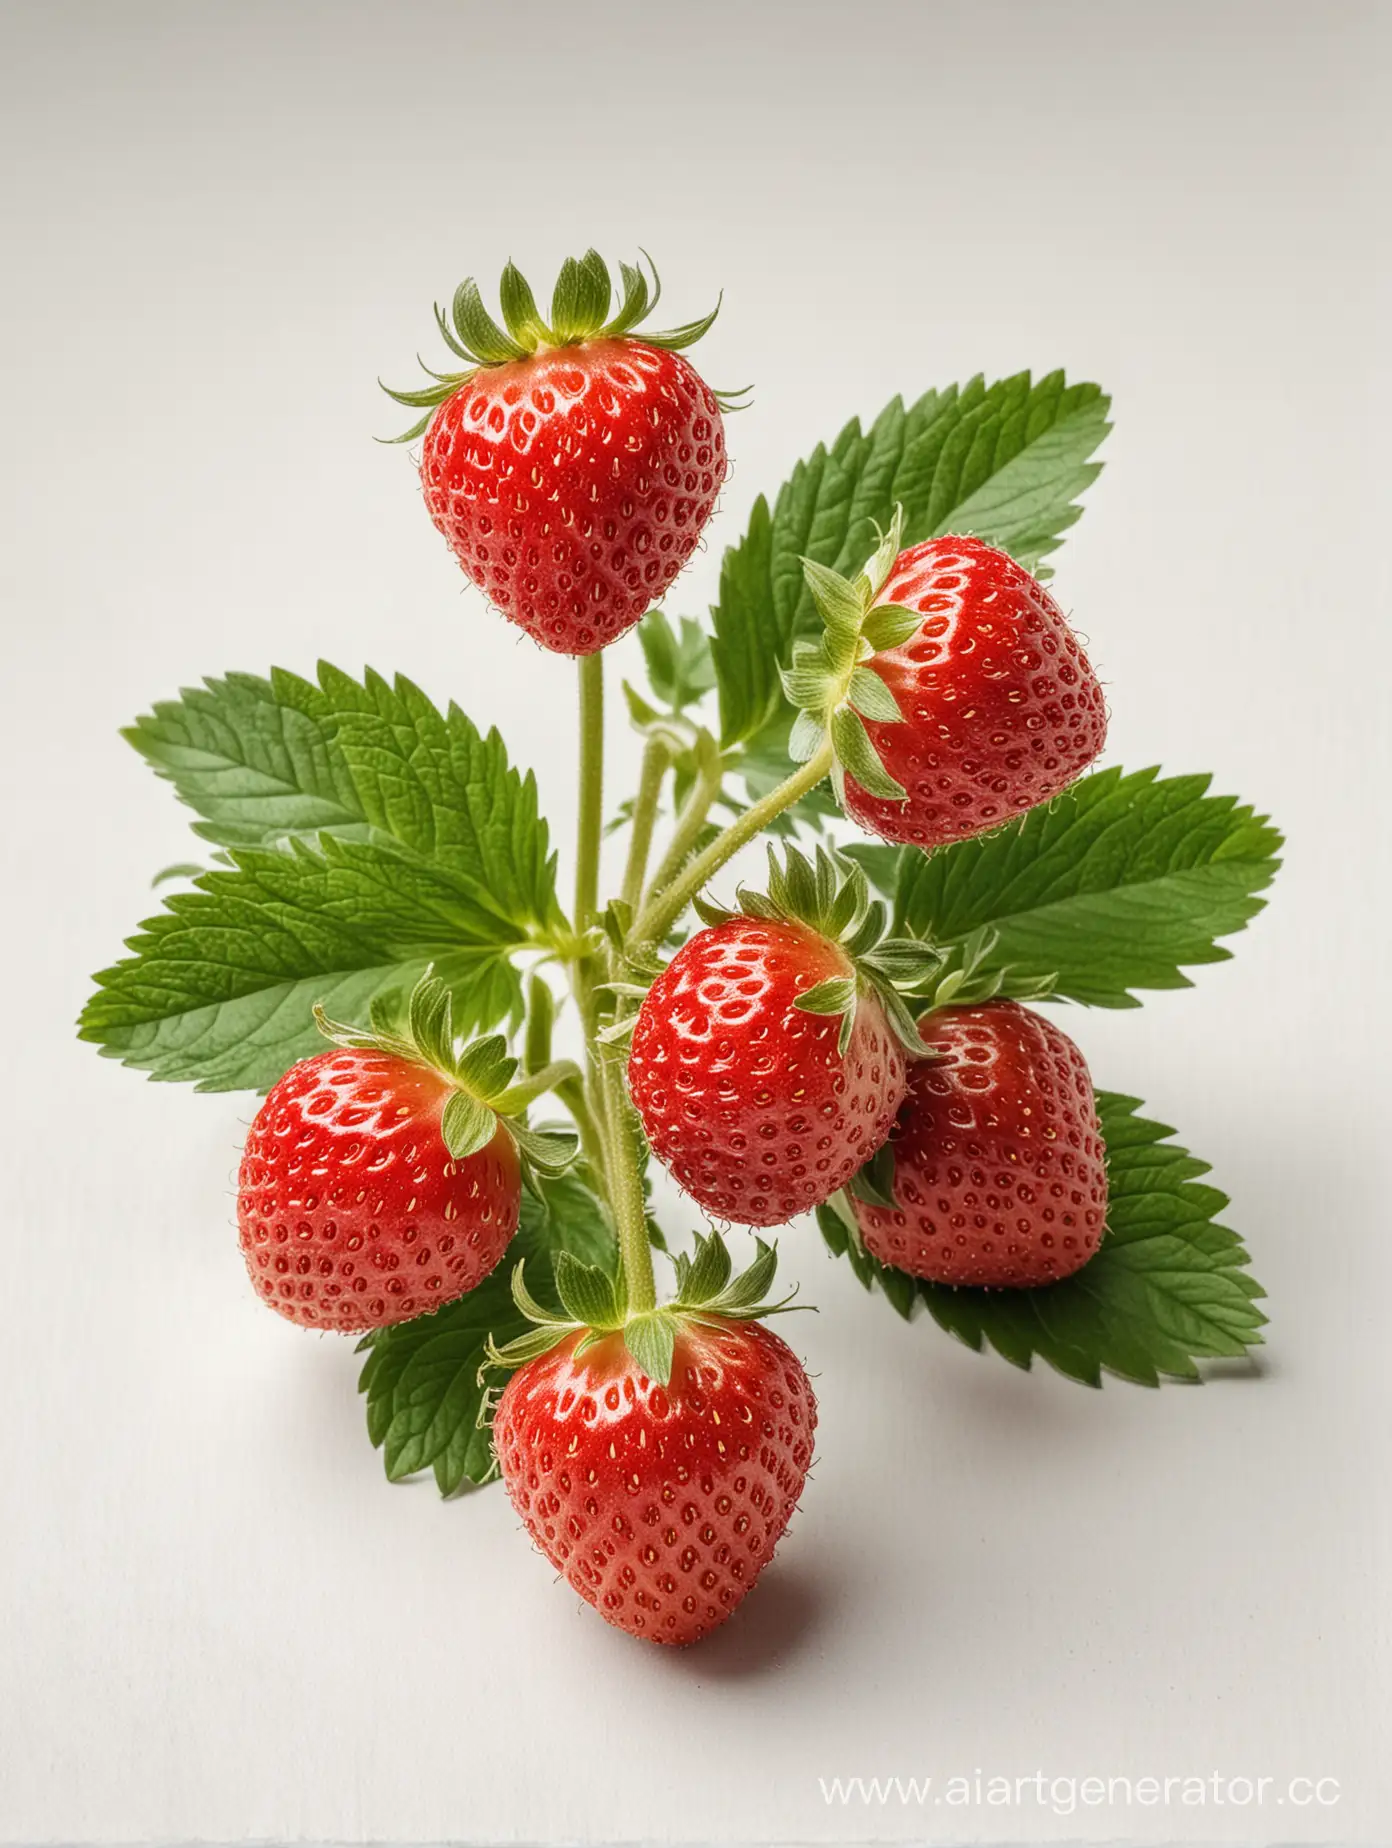 Vibrant-Alpine-Strawberry-Illustration-on-White-Background